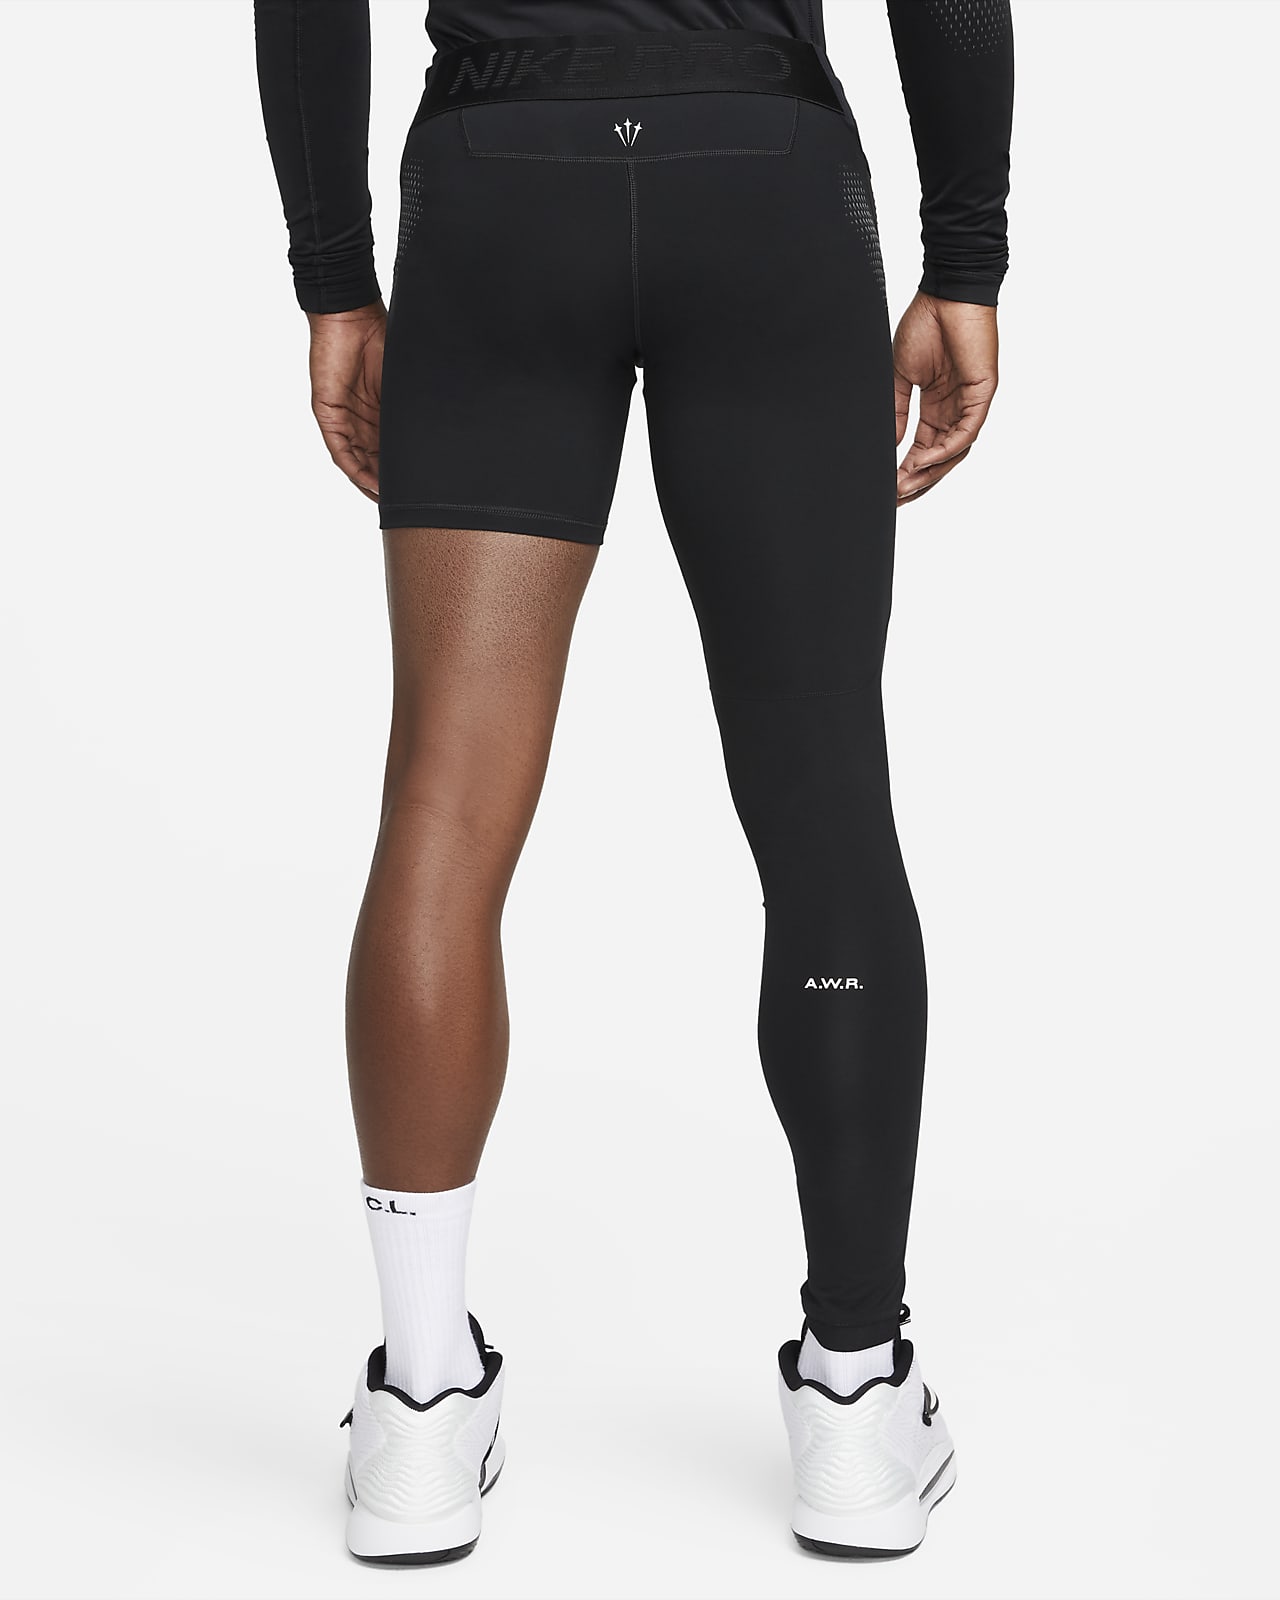 Nike x Drake NOCTA Compression Tight Basketball Left Single Leg